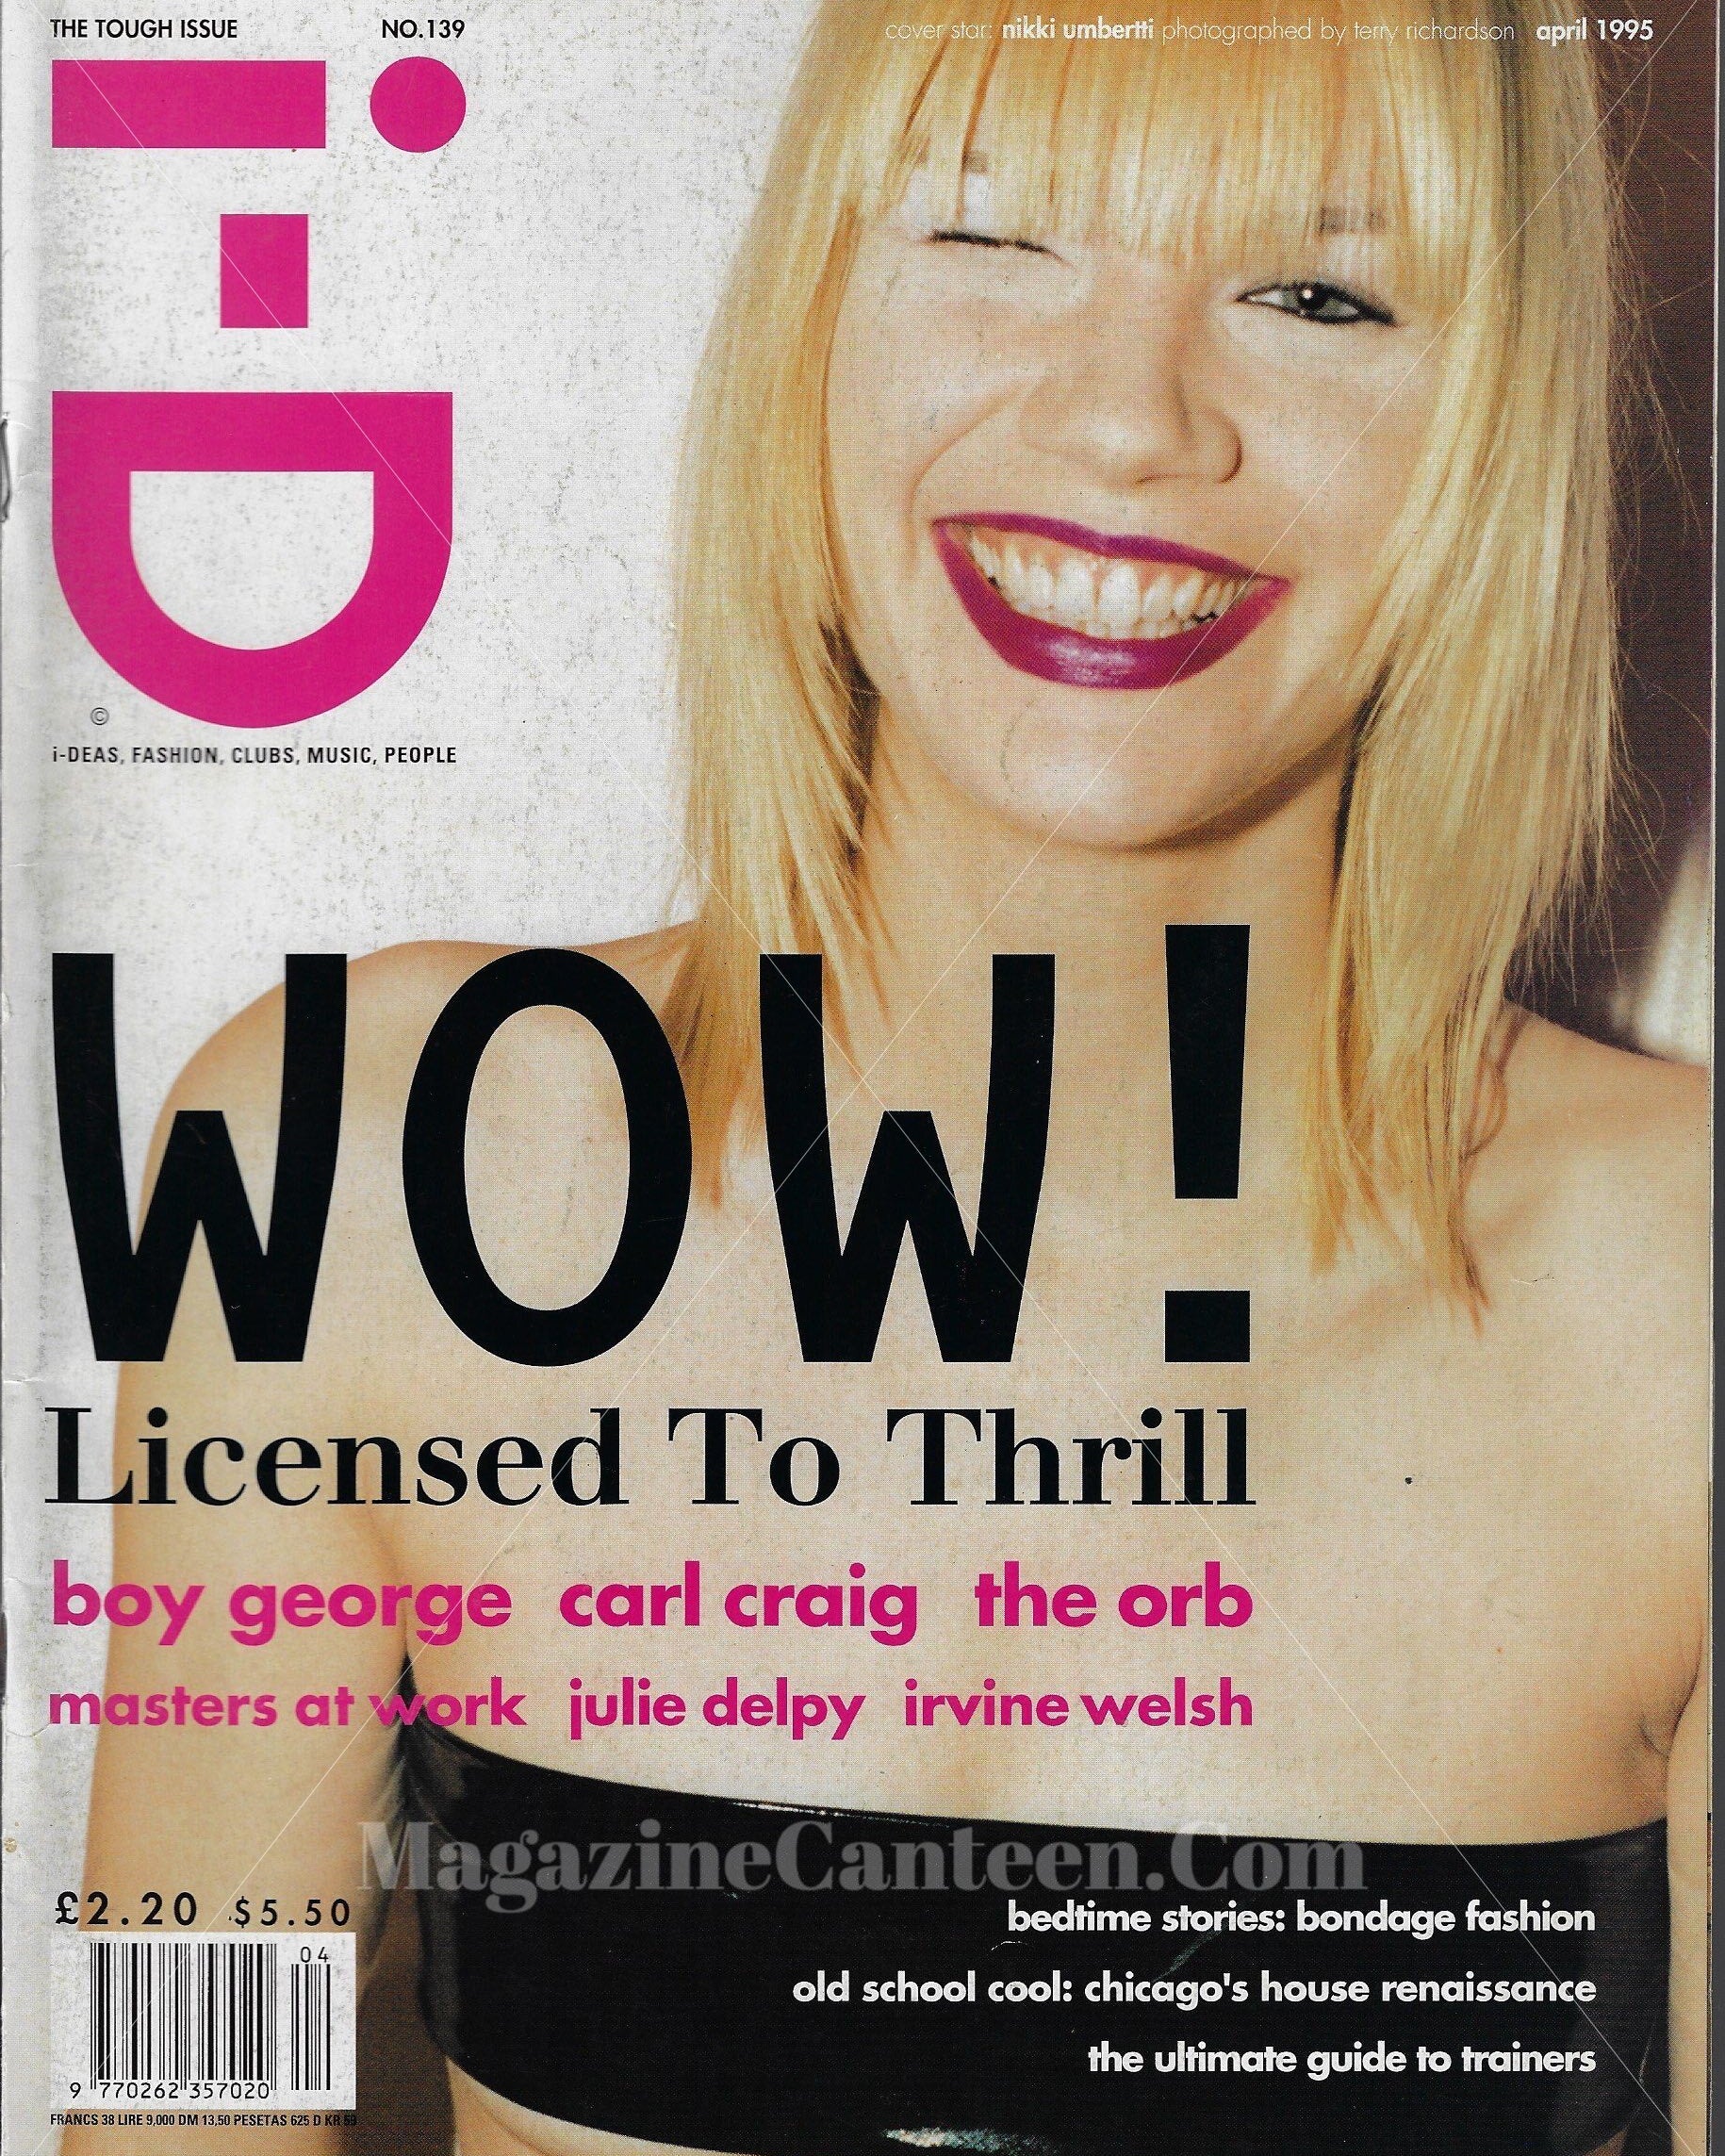 I-D Magazine 139 - Nikki Uberti 1995